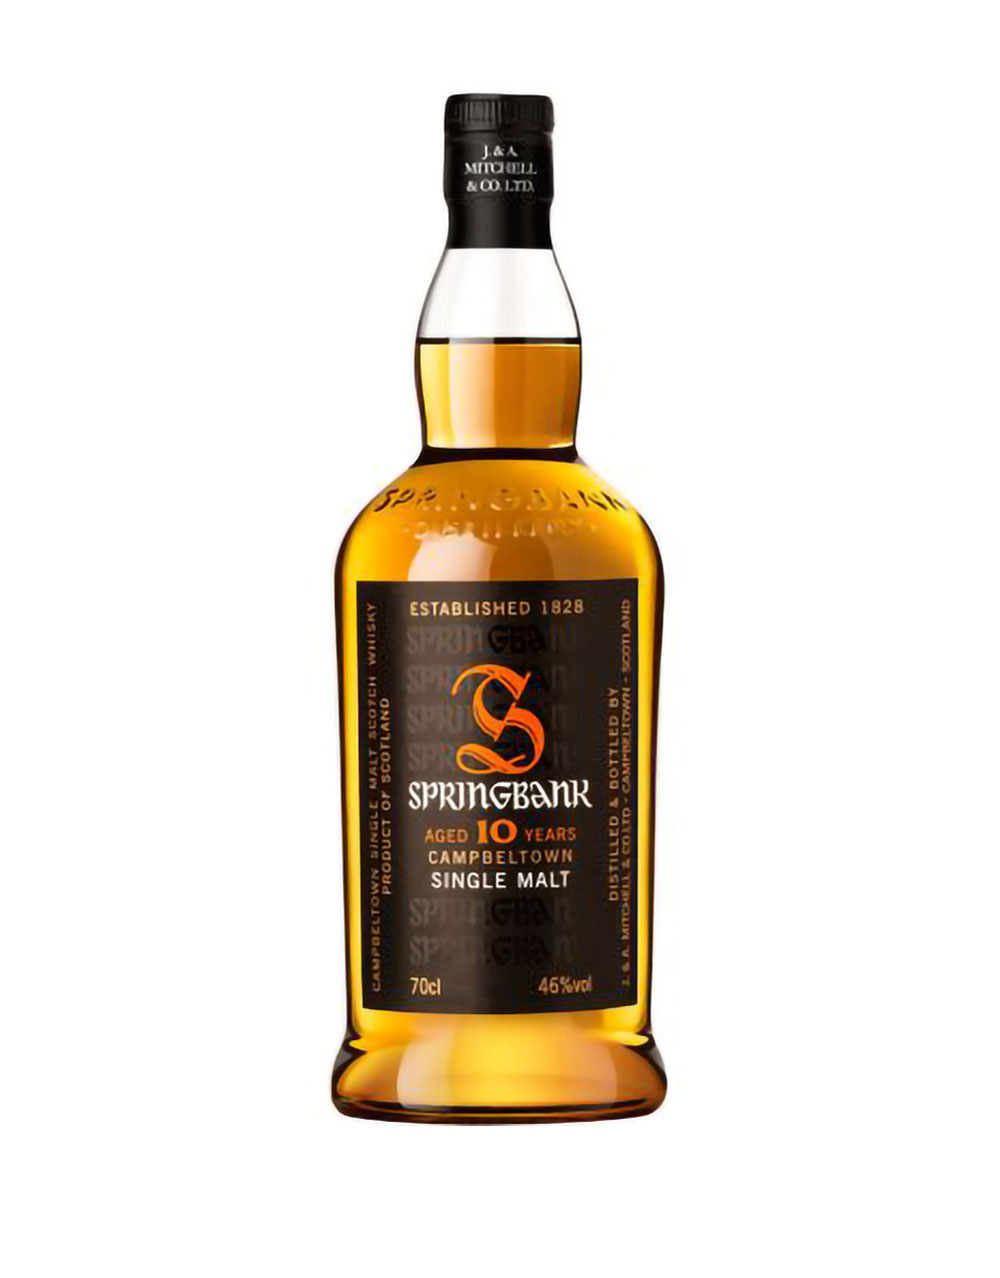 Glenfiddich IPA Experiment Scotch Whisky